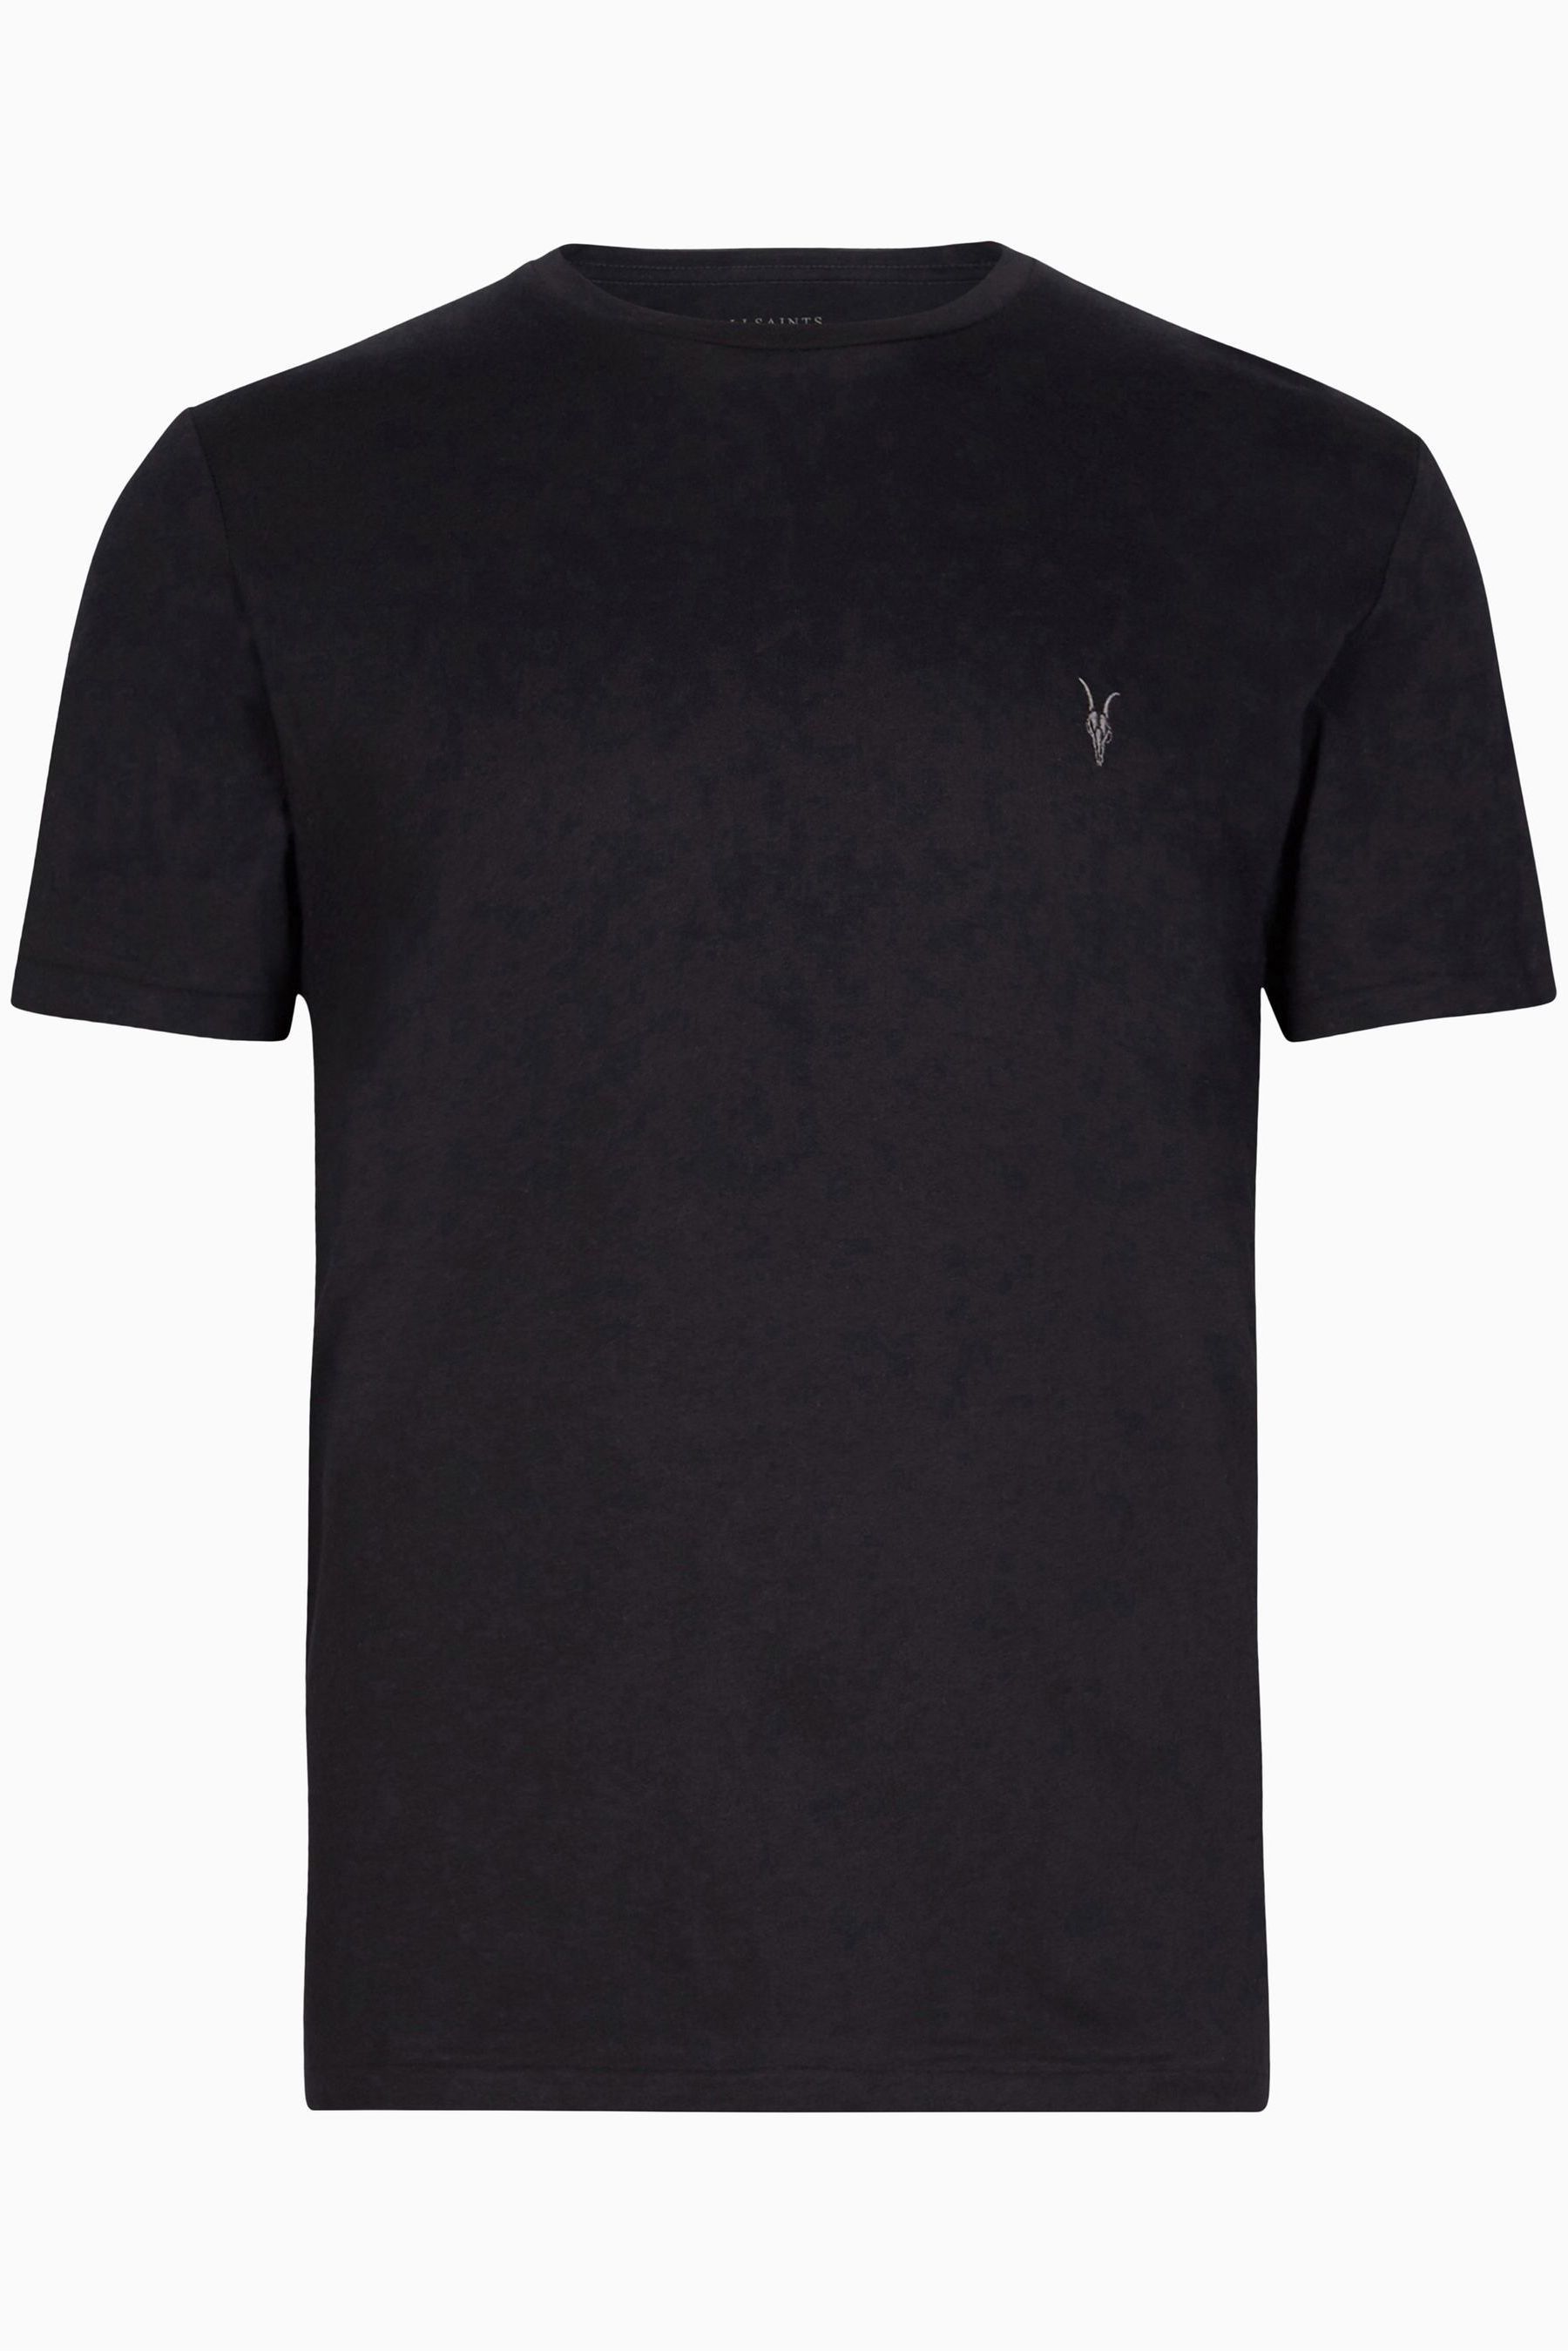 Buy AllSaints Tonic Crew T-Shirt from the Next UK online shop